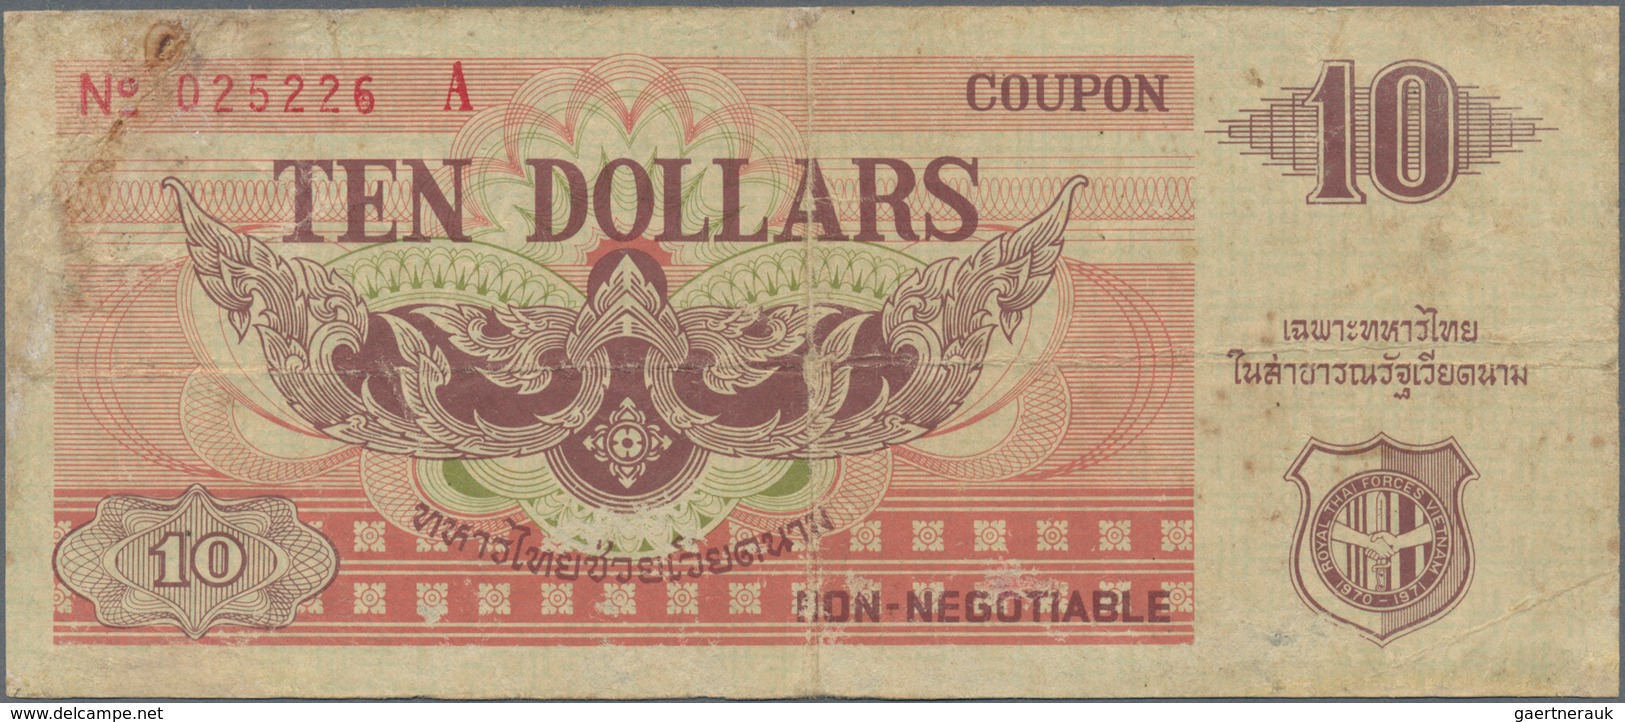 Vietnam: Lot with 7 banknotes including South Korea 1 Dollar MPC P.M29 (PMG 15), Thailand - Vietnam